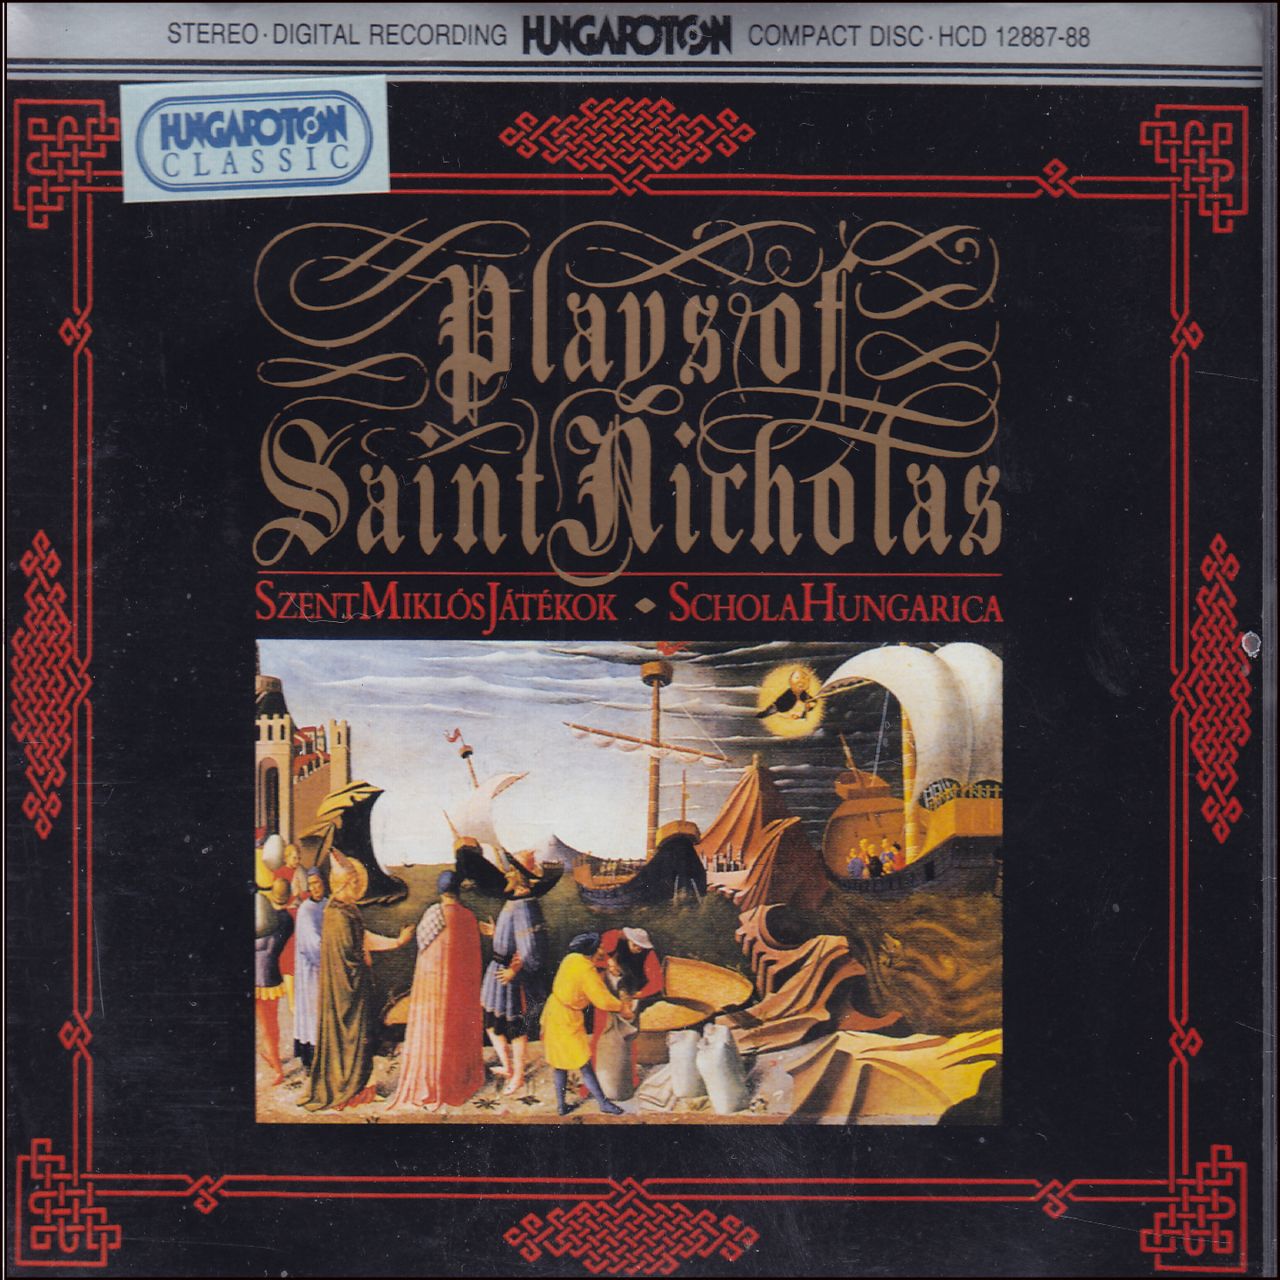 Szent Miklós Játékok Schola Hungarica/ Plays of Saint Nicholas (CD)